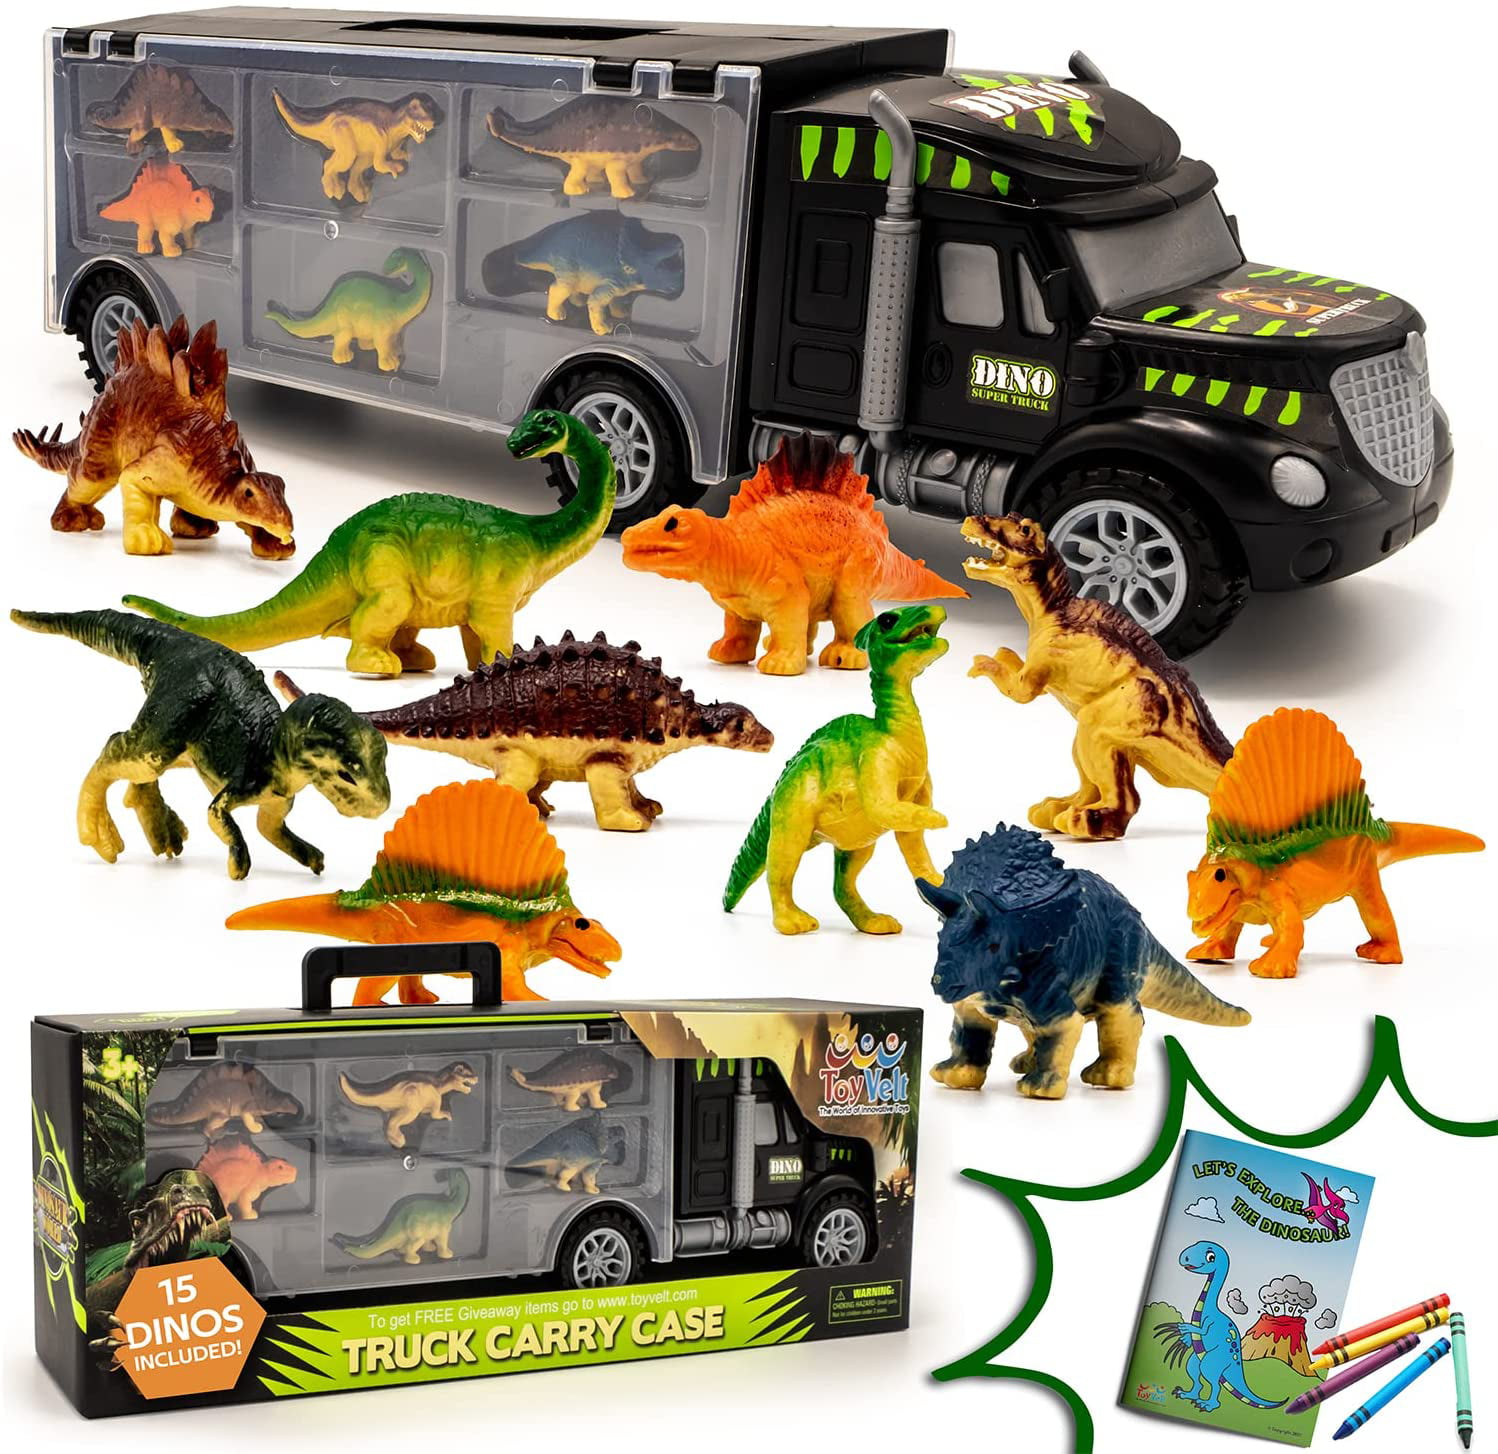 Prextex 16” Tractor Trailer Dinosaur Carrier With 6 Mini Plastic Dinosaurs 